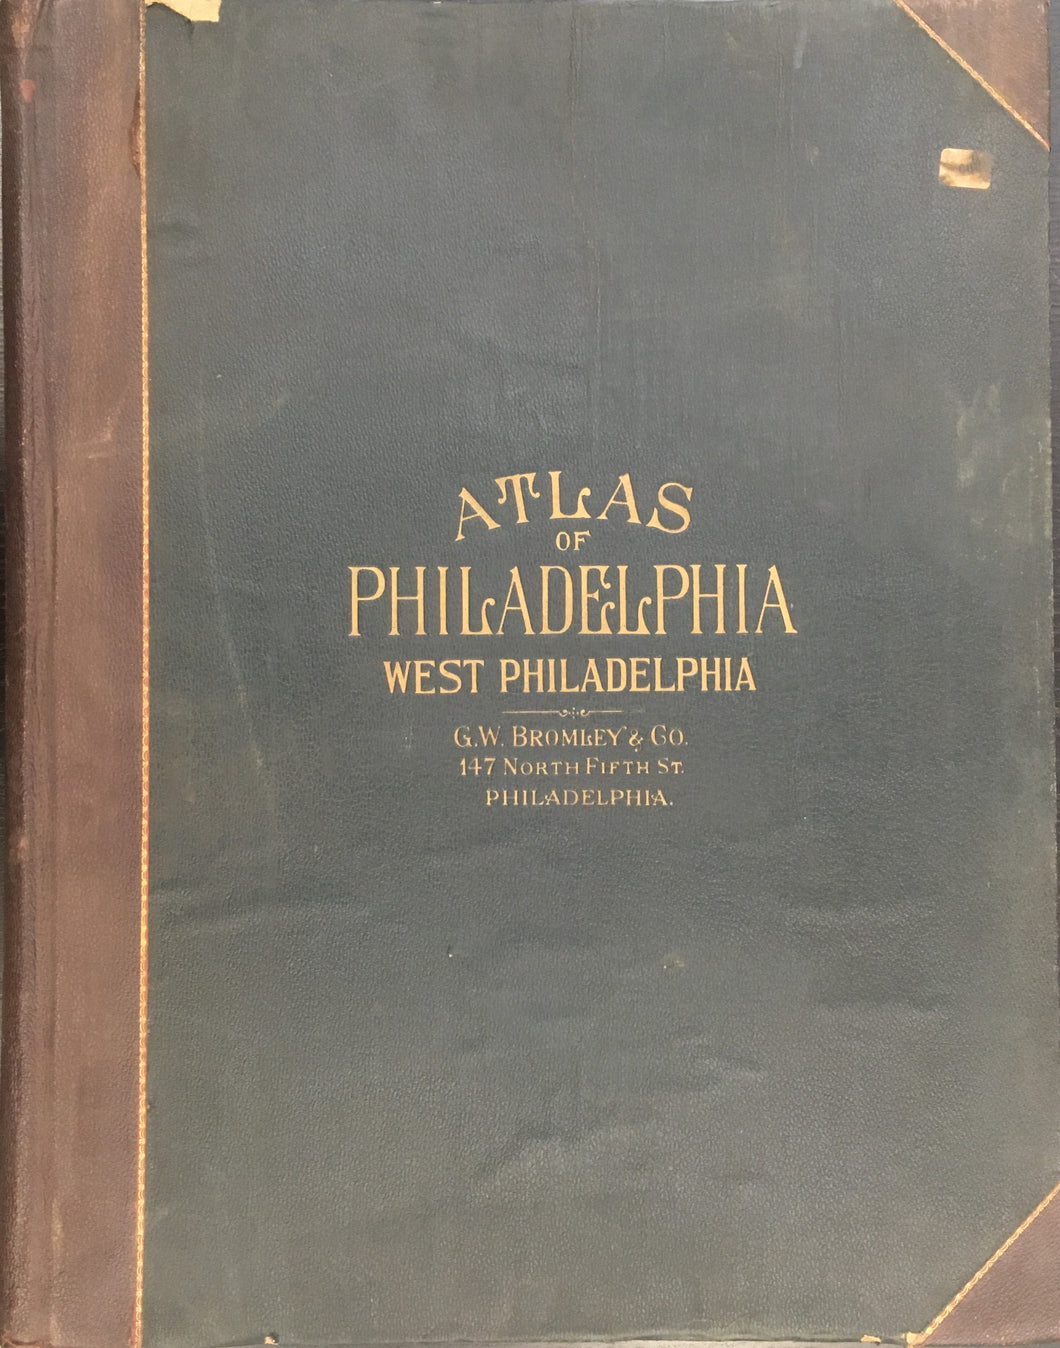 Bromley, G.W.  “Atlas of the City of Philadelphia. Wards, 24, 27, 34, 40, 44, & 46.”  [West Philadelphia].  1918